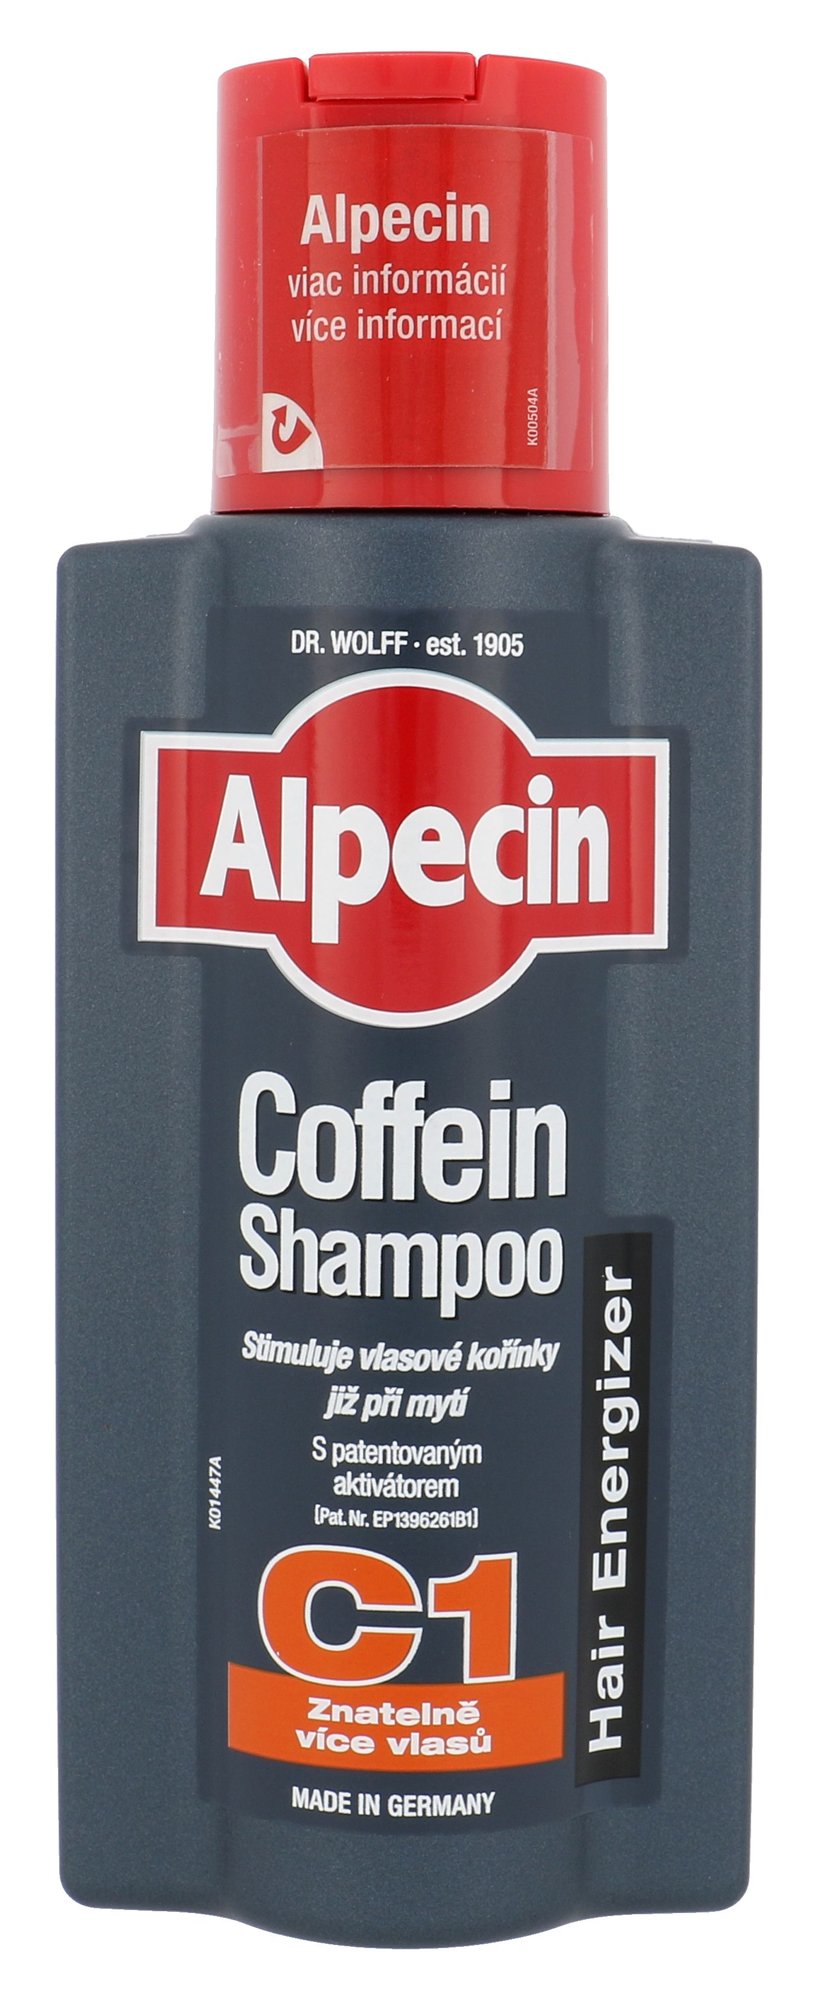 Alpecin Caffeine Shampoo Hair Energizer